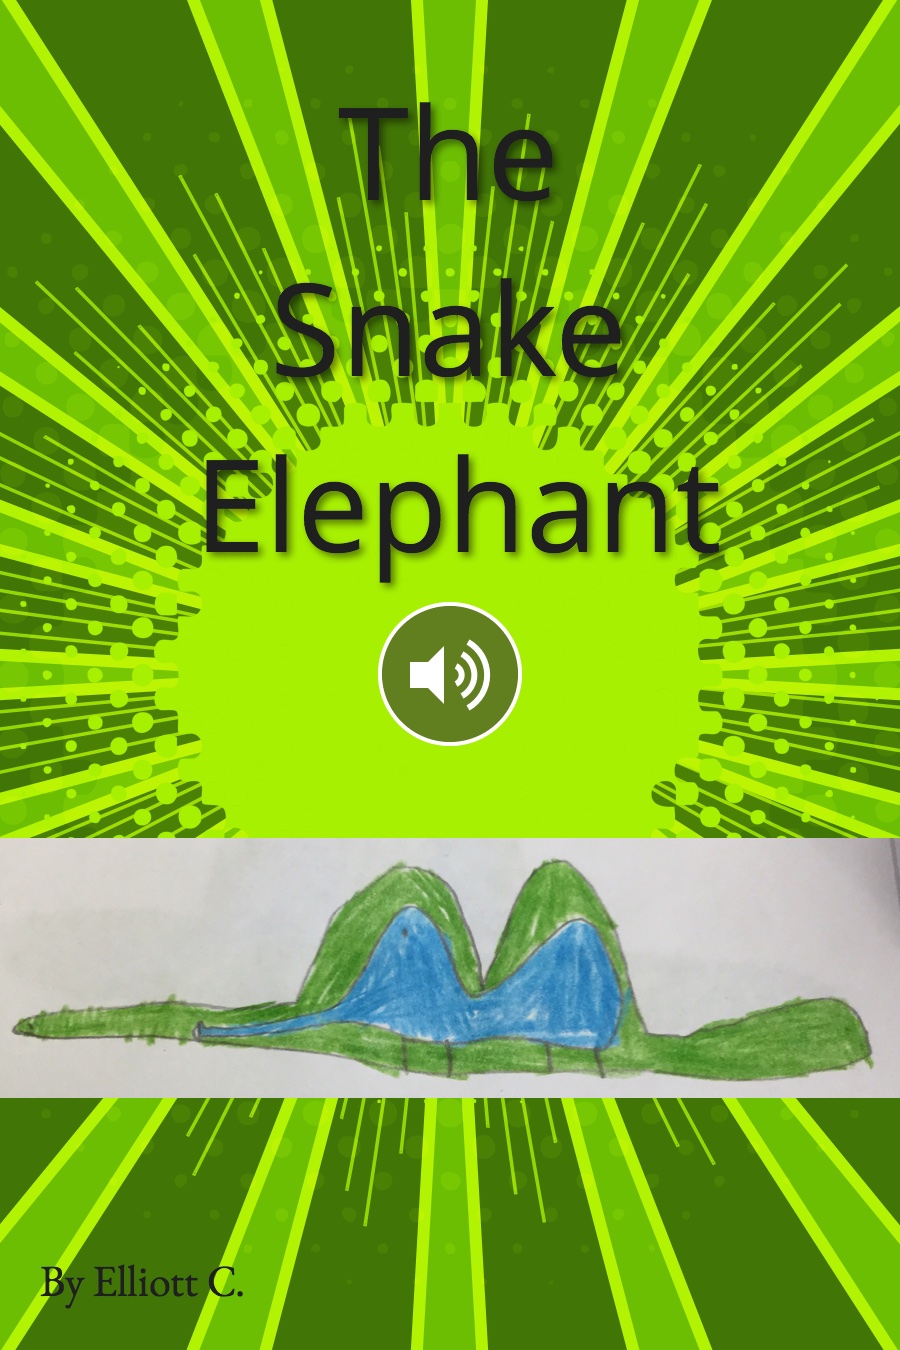 The Elephant Snake by Elliot C